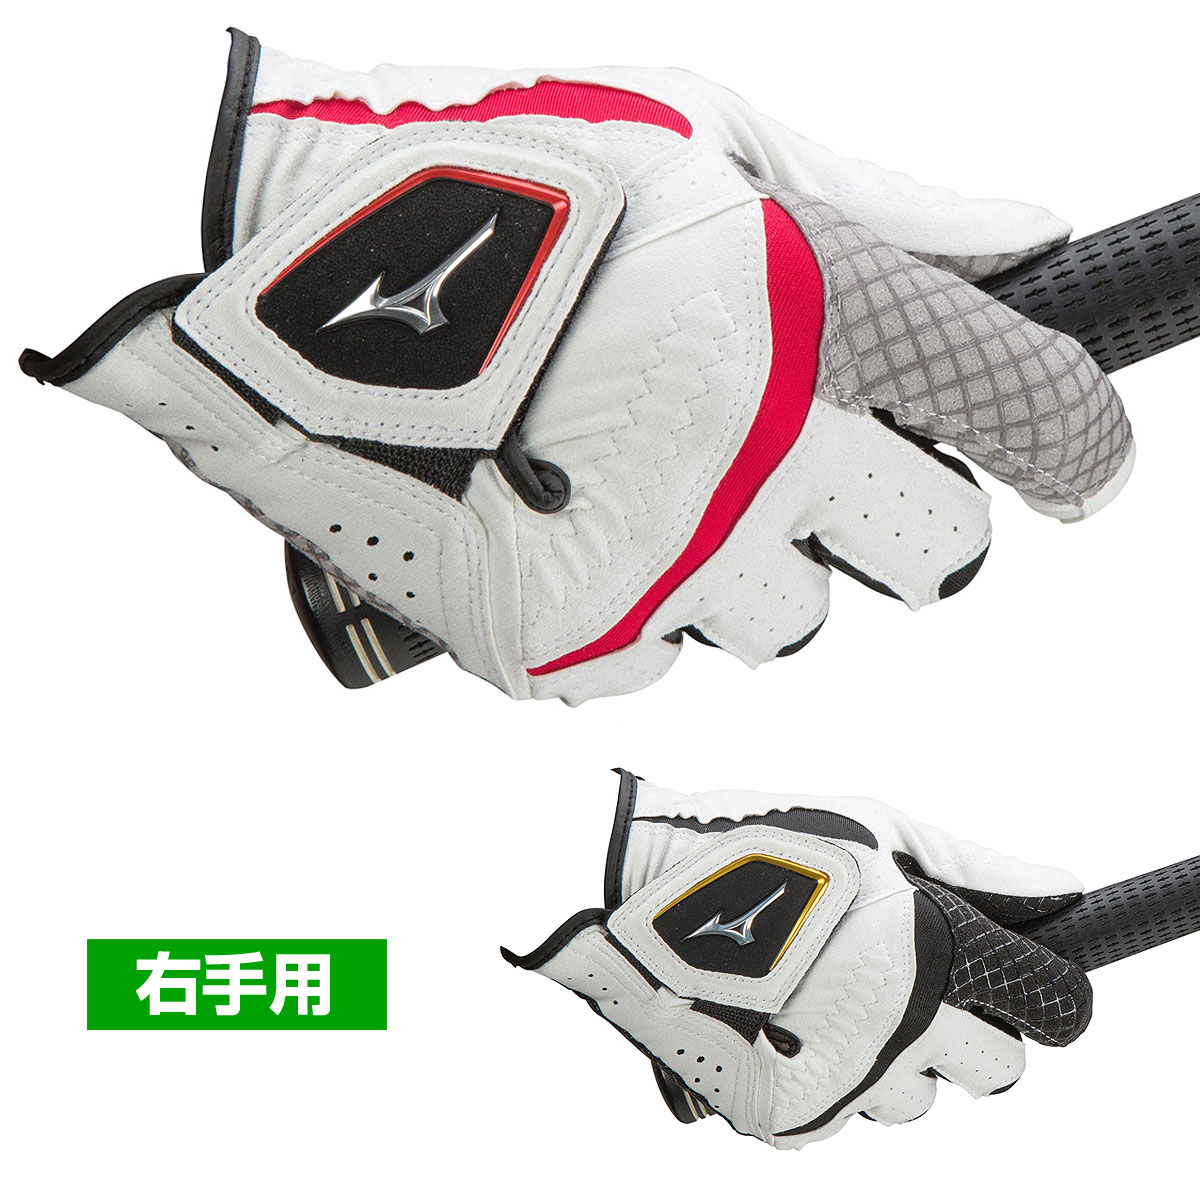 MIZUNO ミズノ正規品 W-GRIP(ダブルグリップ) メンズ ゴルフグローブ(右手用) 「 5MJMR051 」 